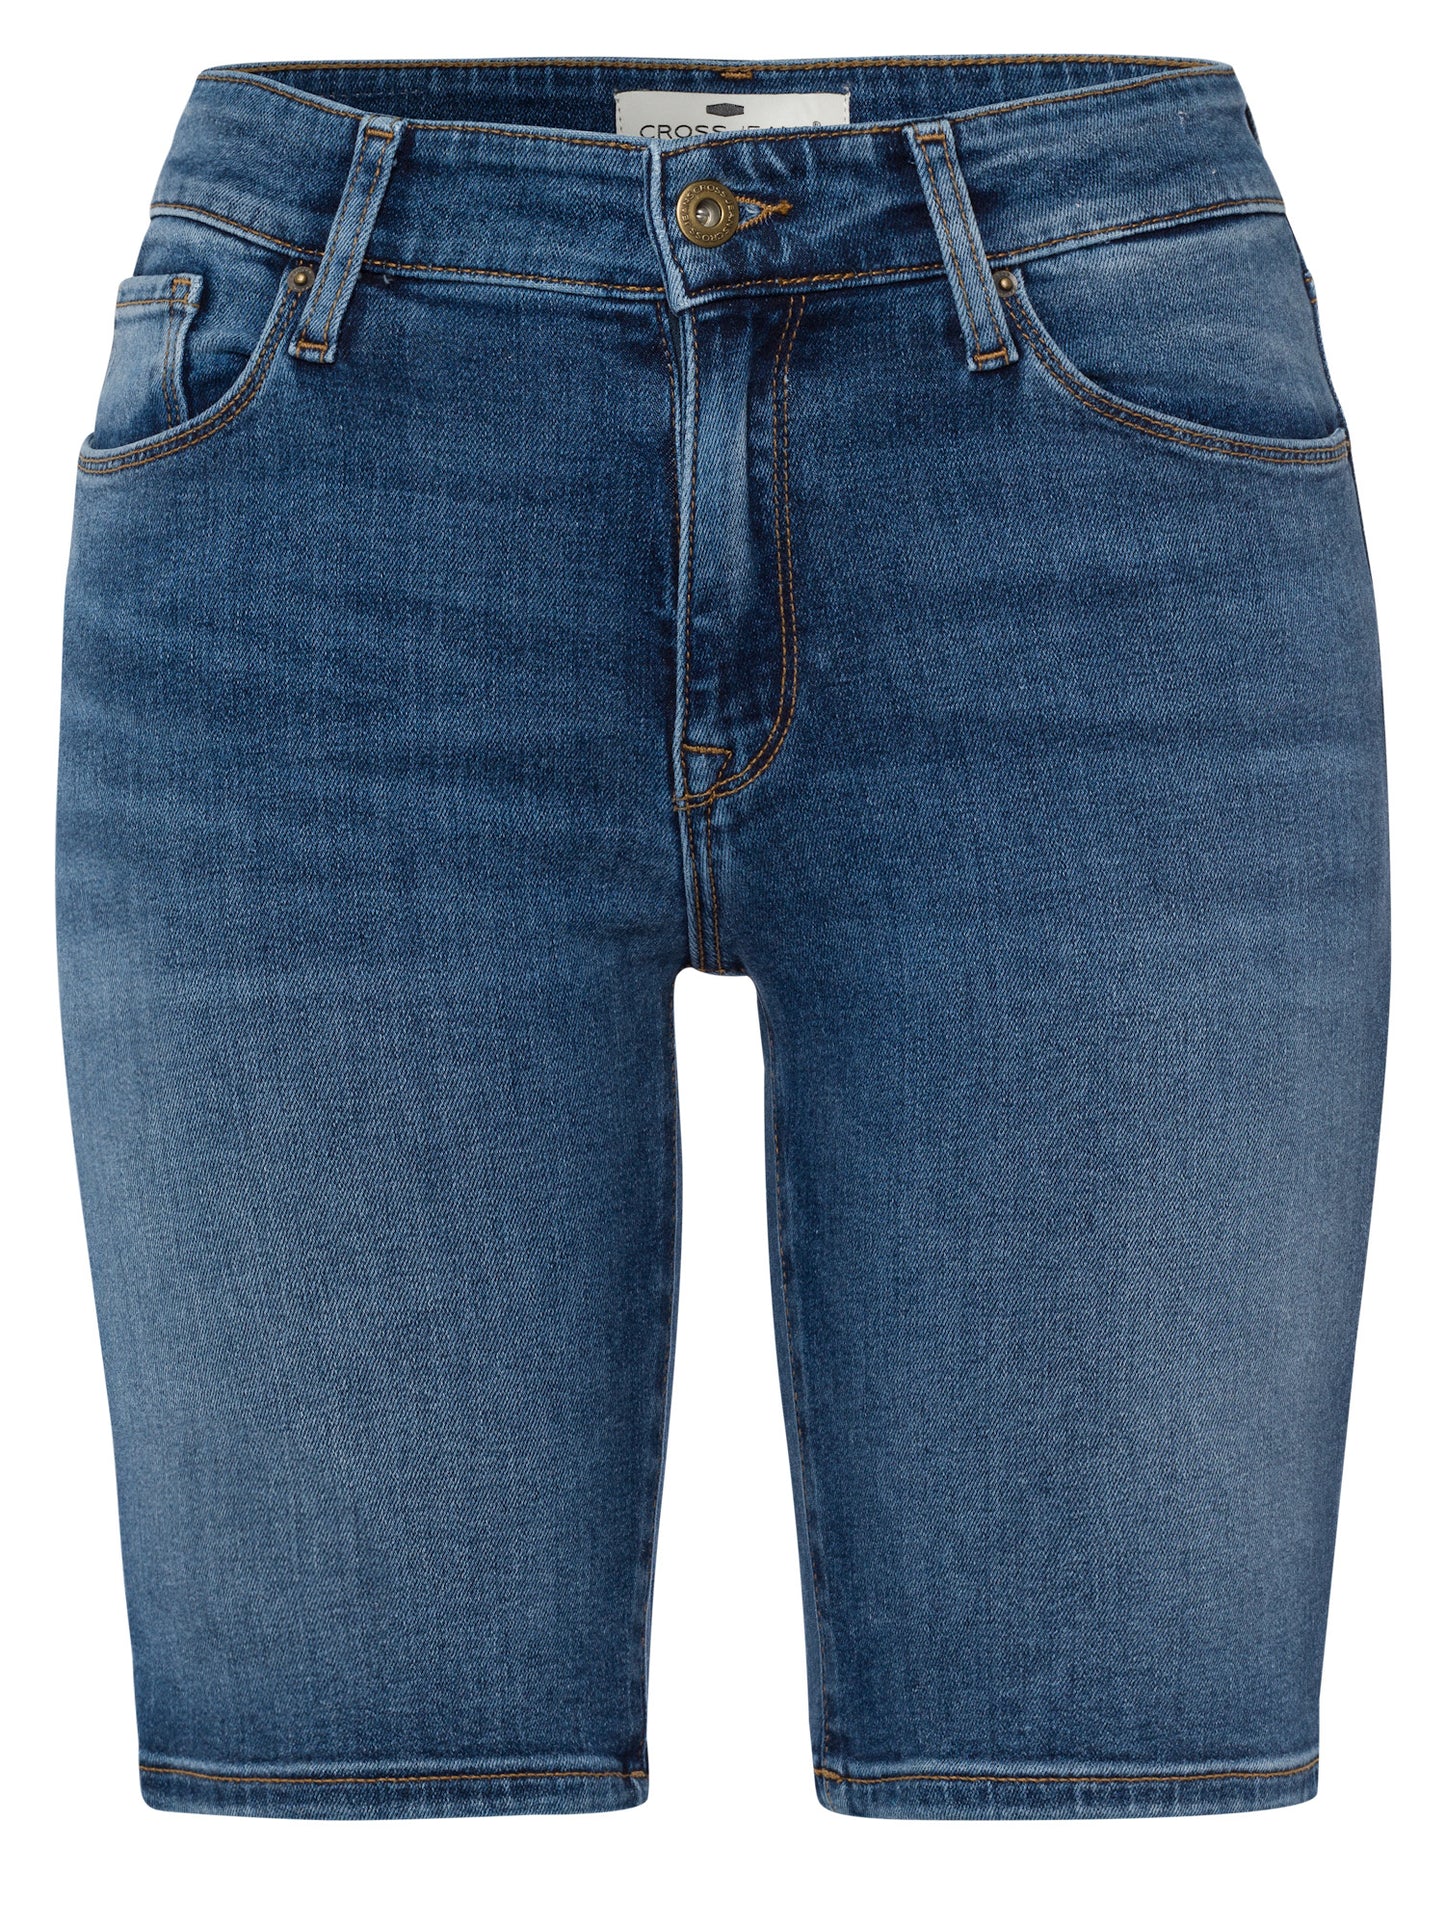 Damen Jeans Shorts Anya Slim Fit High Waist dunkel blau